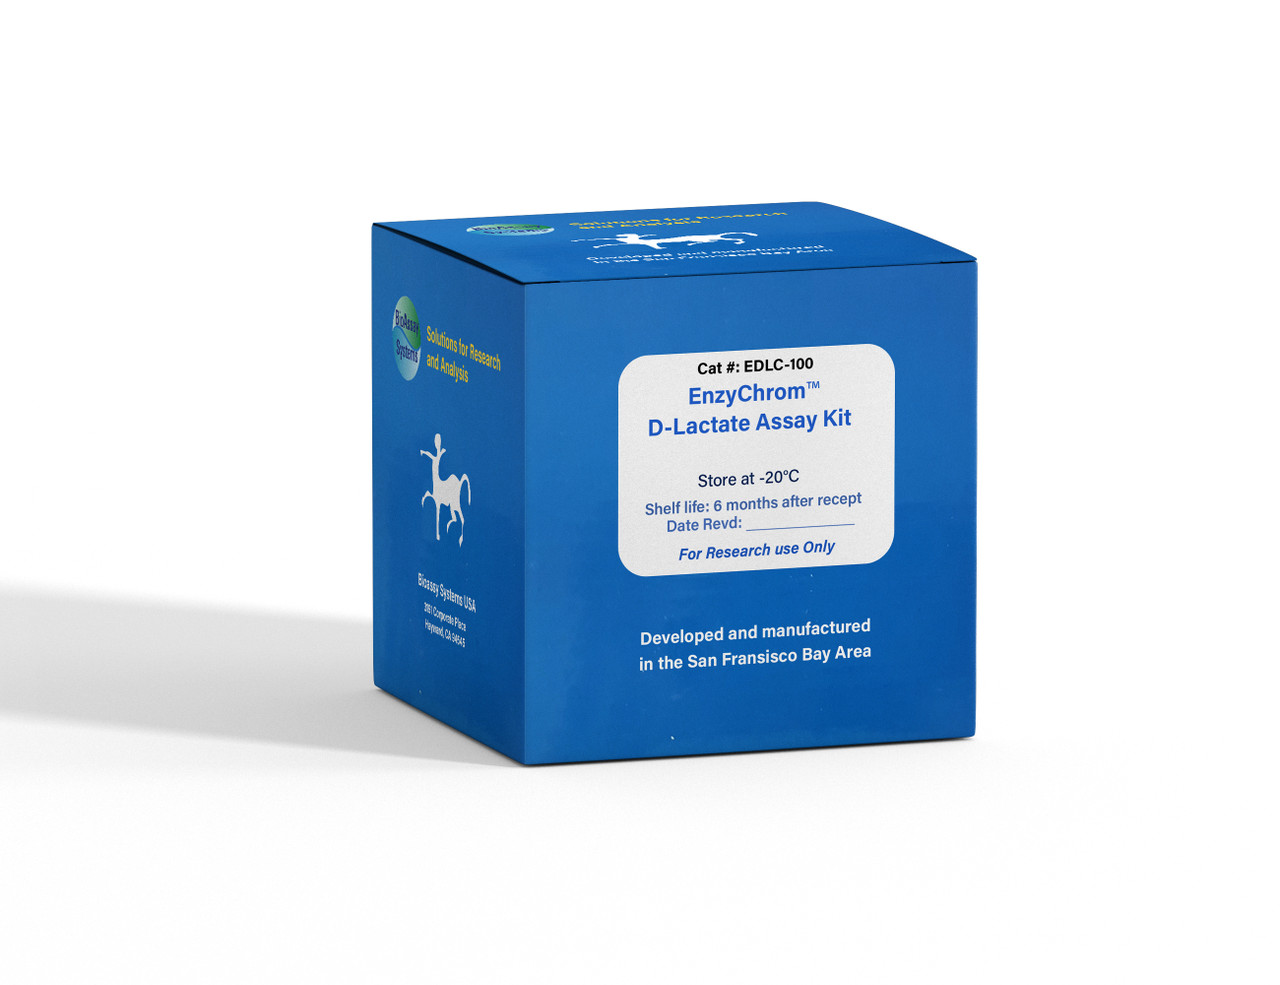 EnzyChrom D-Lactate Assay Kit